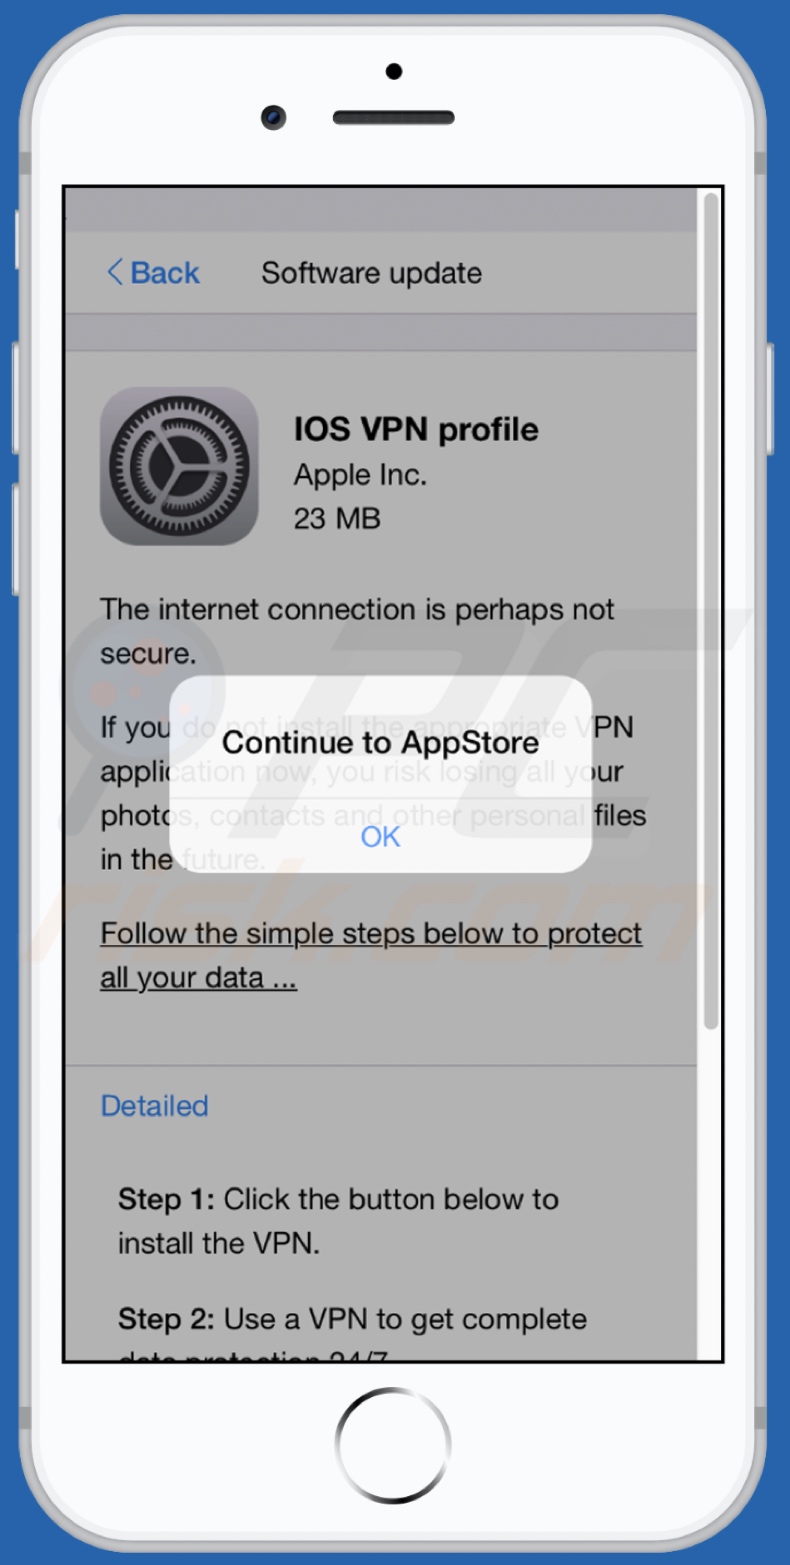 Wariant komórkowy oszustwa IOS VPN profile